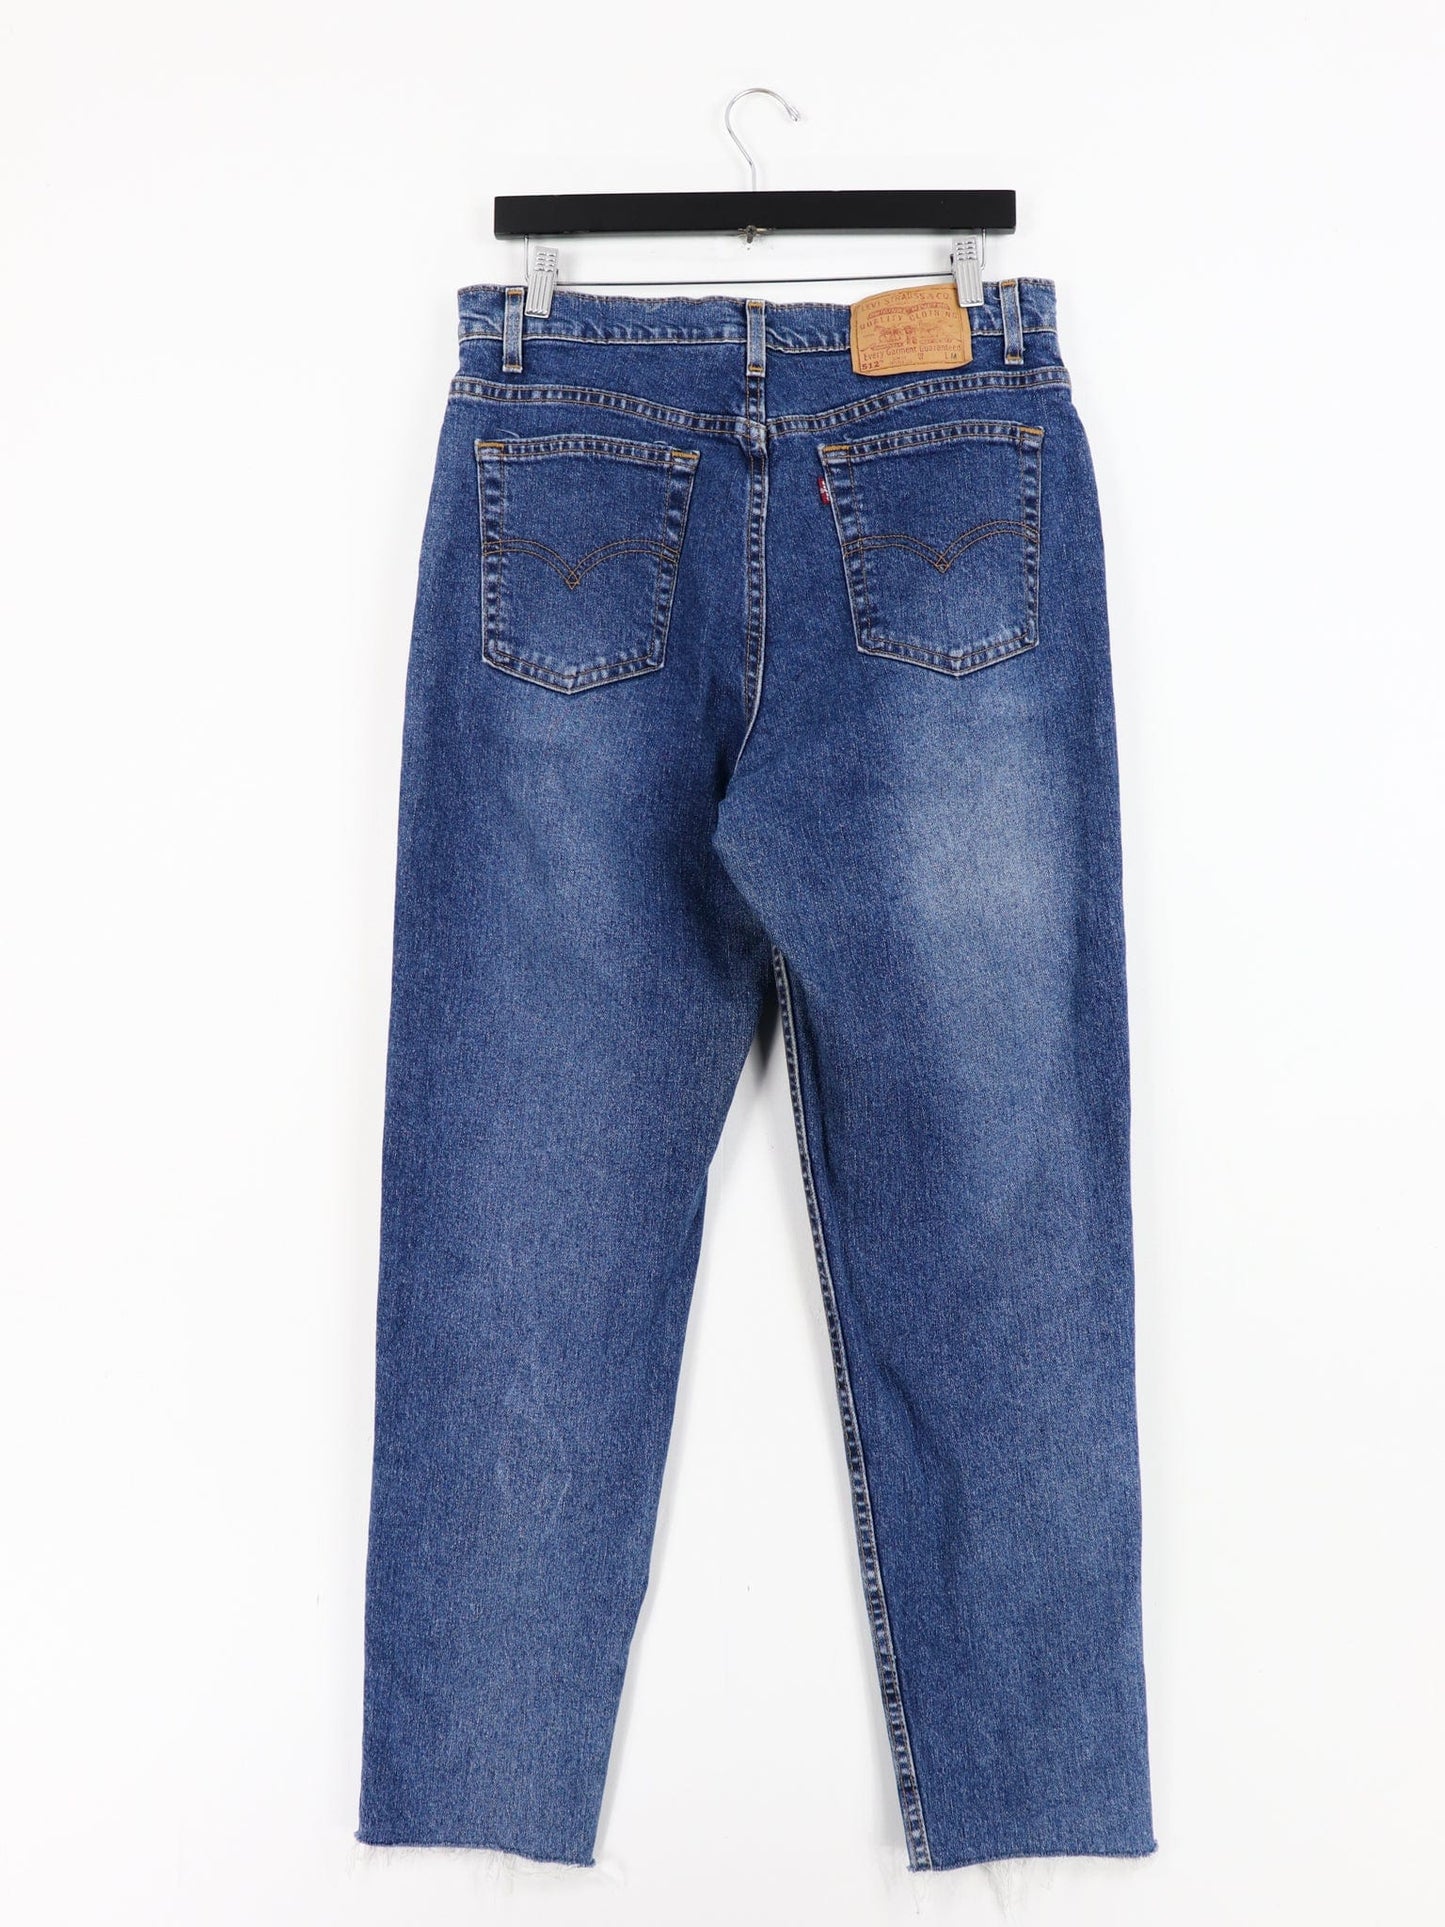 Levi's Jeans Vintage Levi's 512 Slim Tapered Fit Denim Jeans Women's Size 14M(34 x 30)